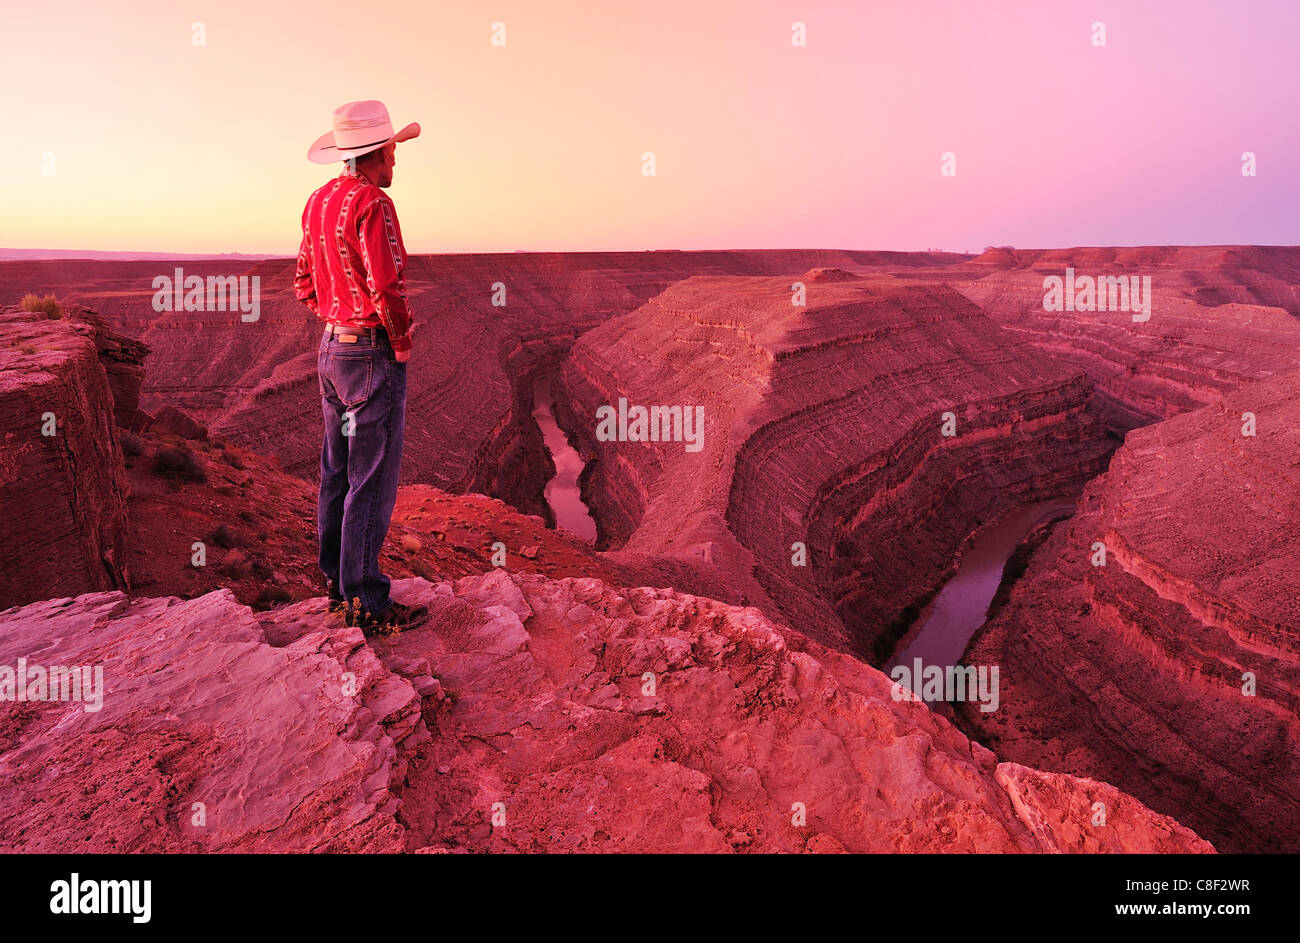 Snodi, Parco Statale, il fiume San Juan, Colorado Plateau, Utah, Stati Uniti d'America, Stati Uniti, America, uomo, cercando, canyon, cowboy Foto Stock